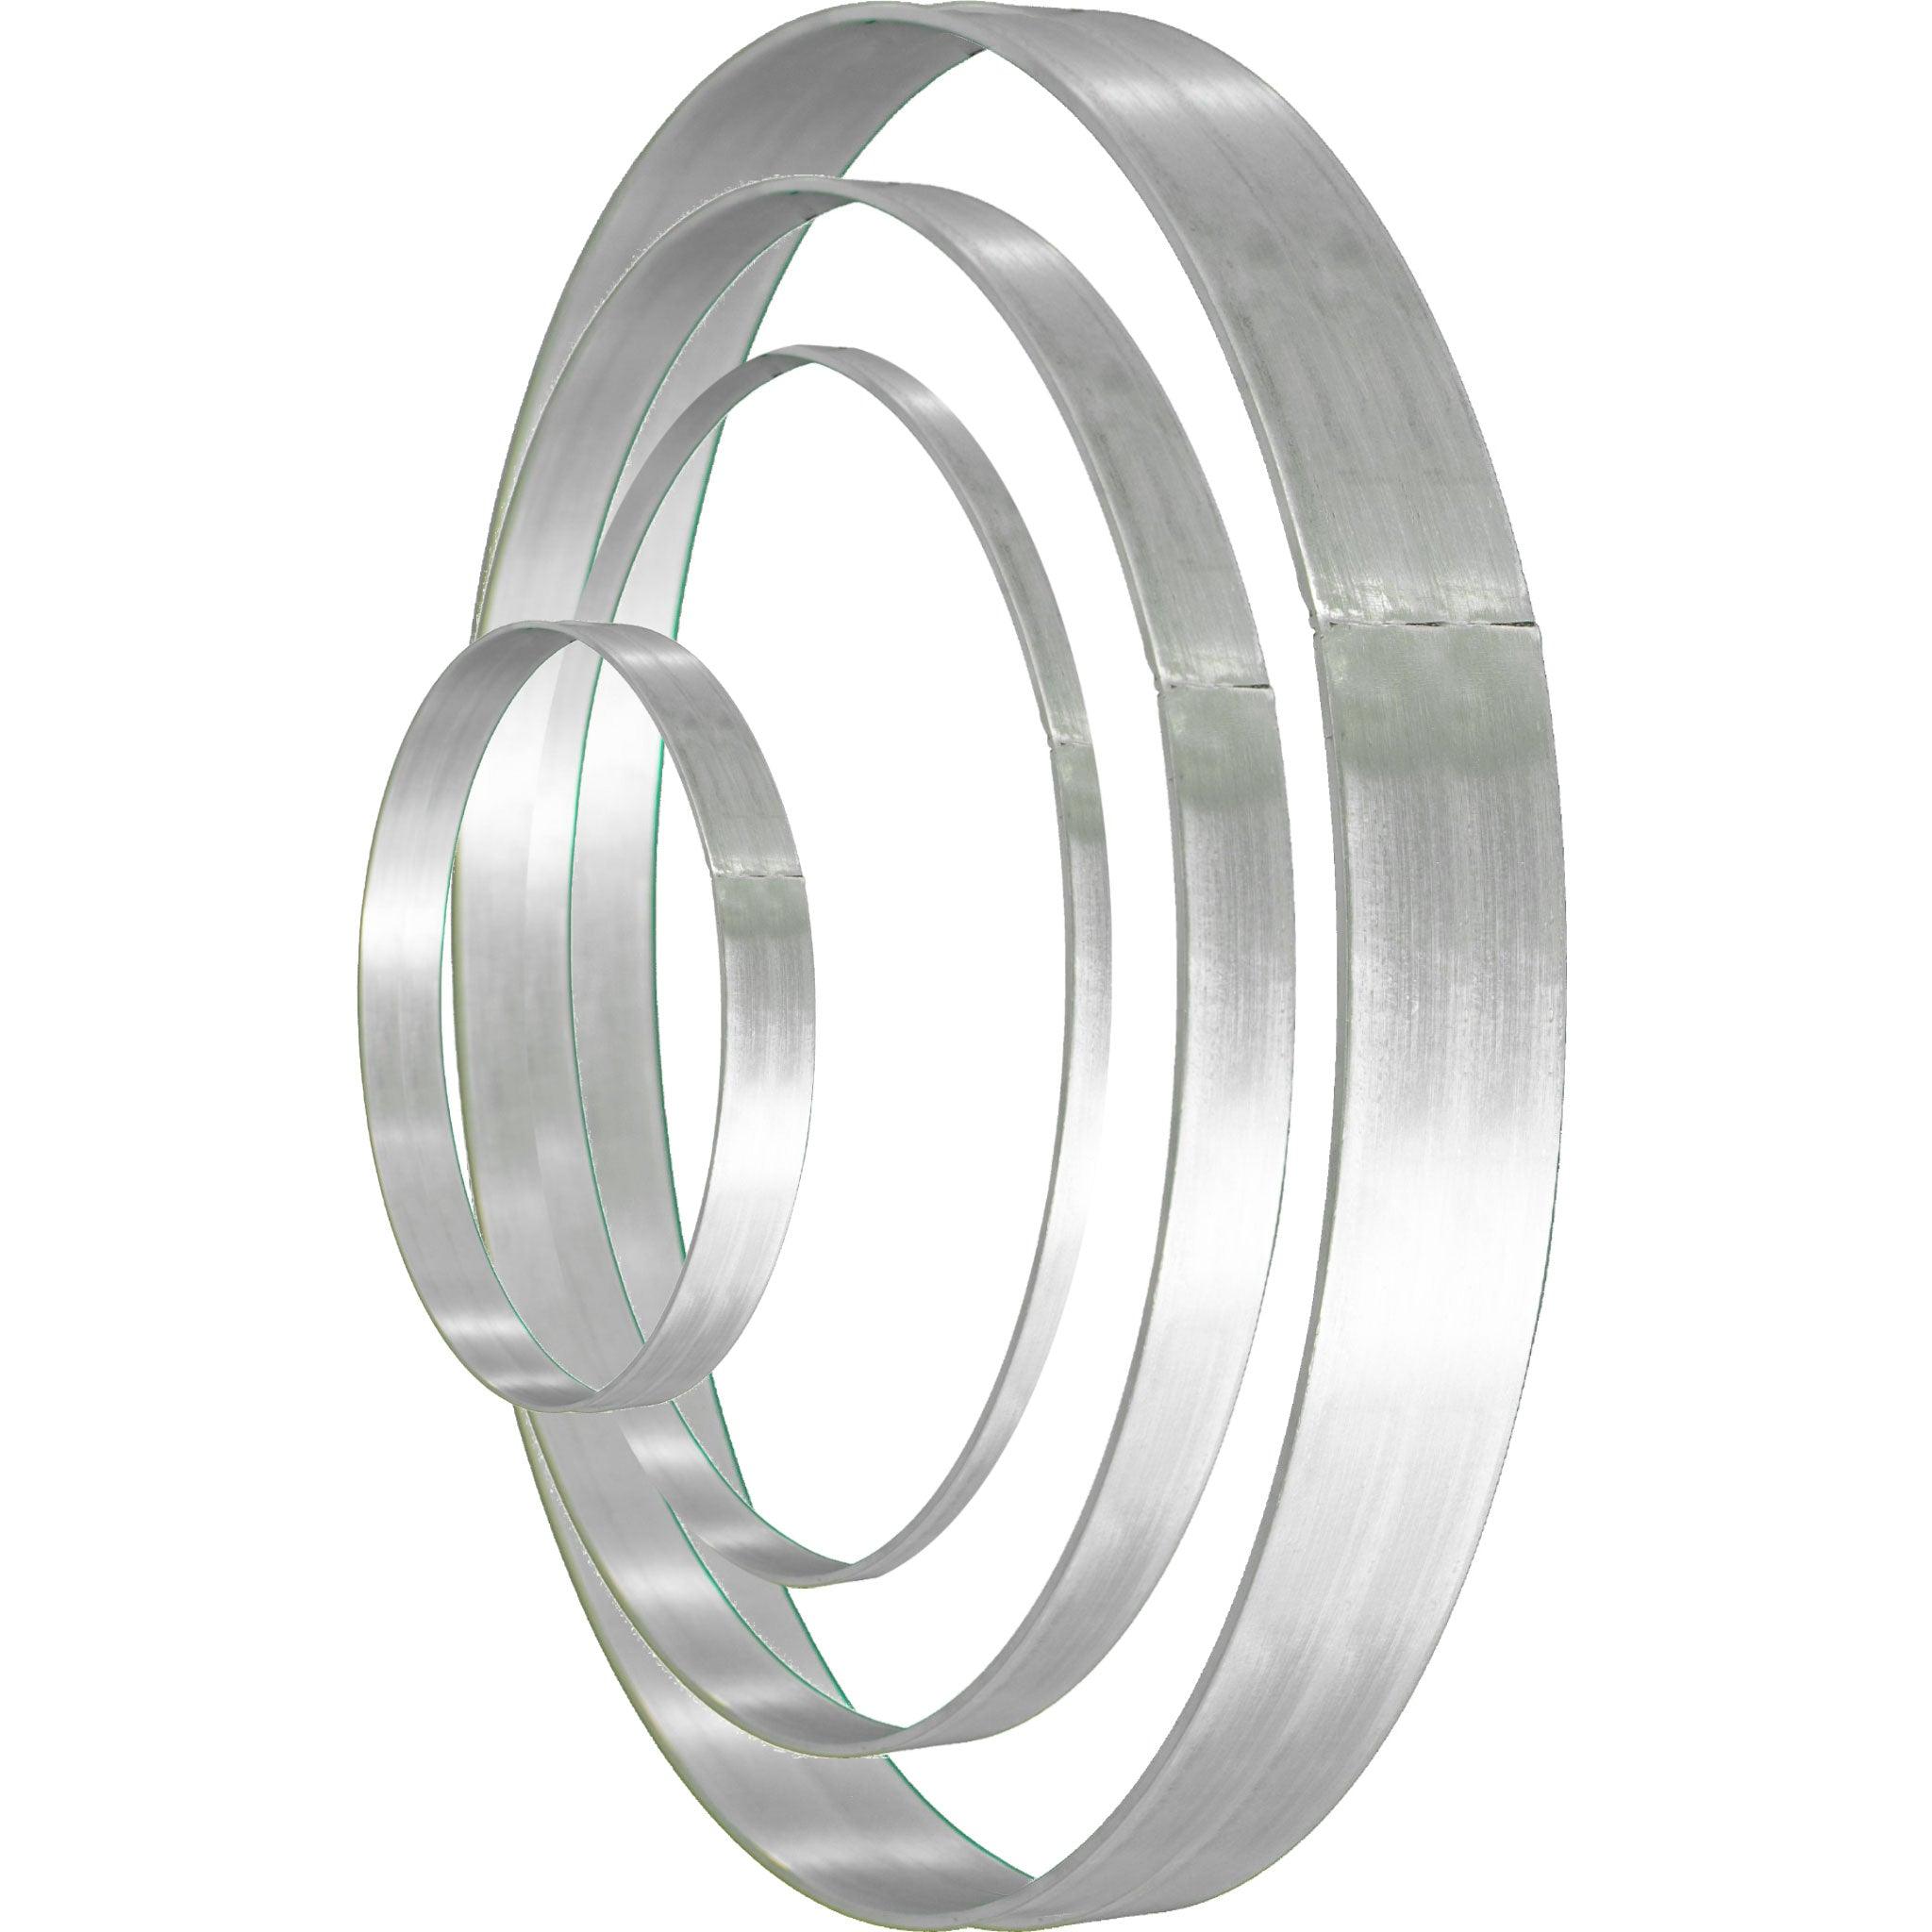 Aluminum Rings on Sale, Custom Sizes, Dimensions